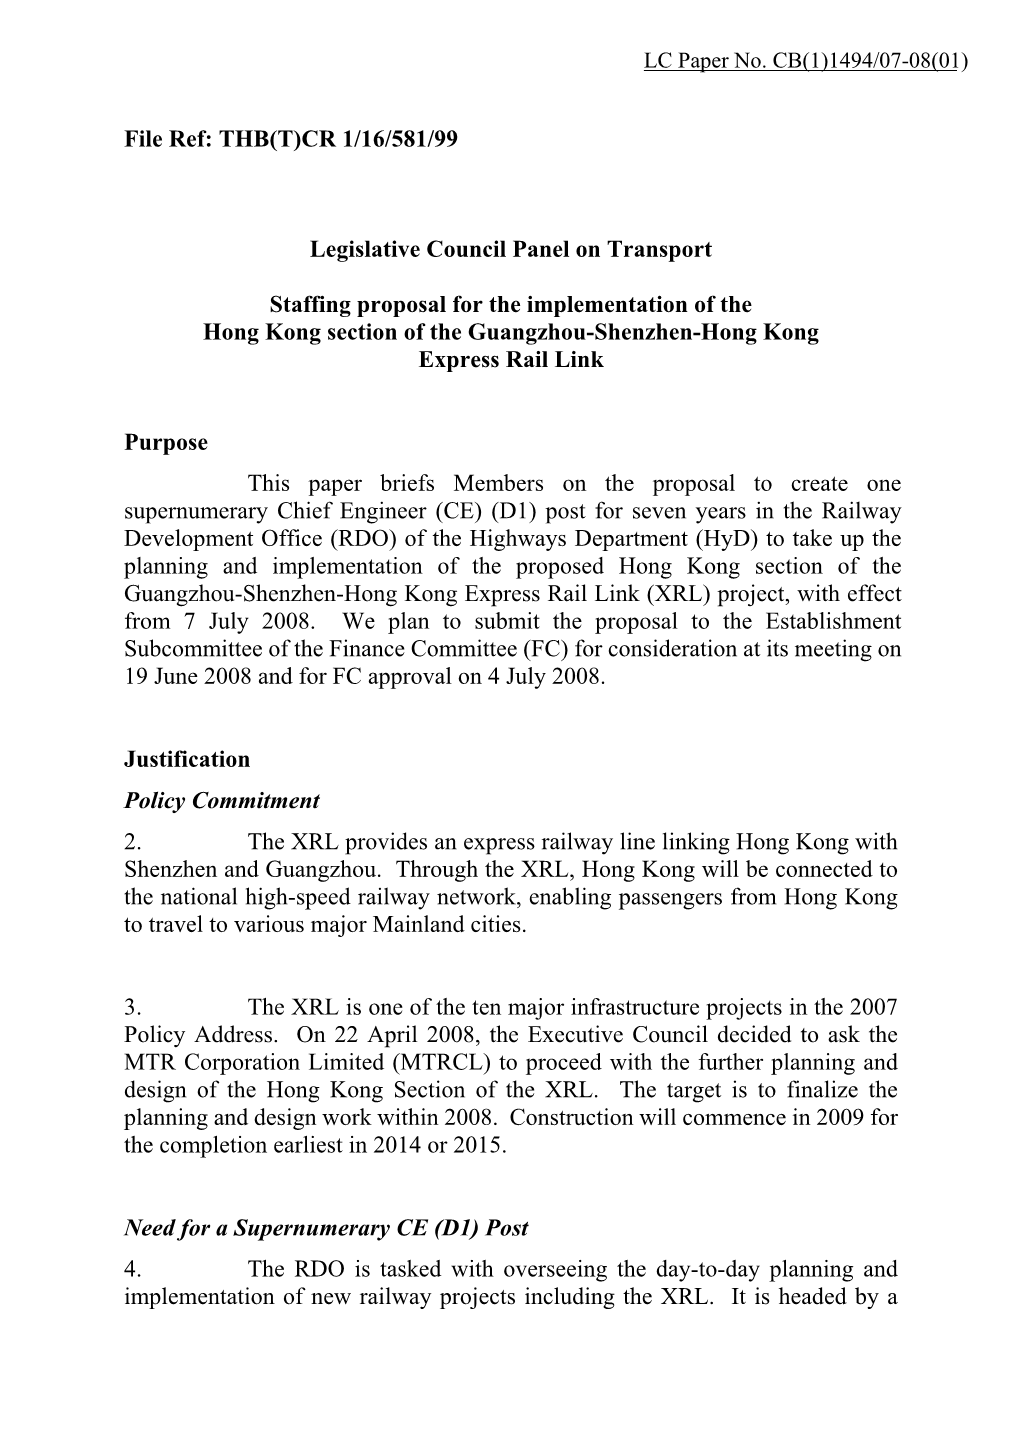 CR 1/16/581/99 Legislative Council Panel on Transport Staffing